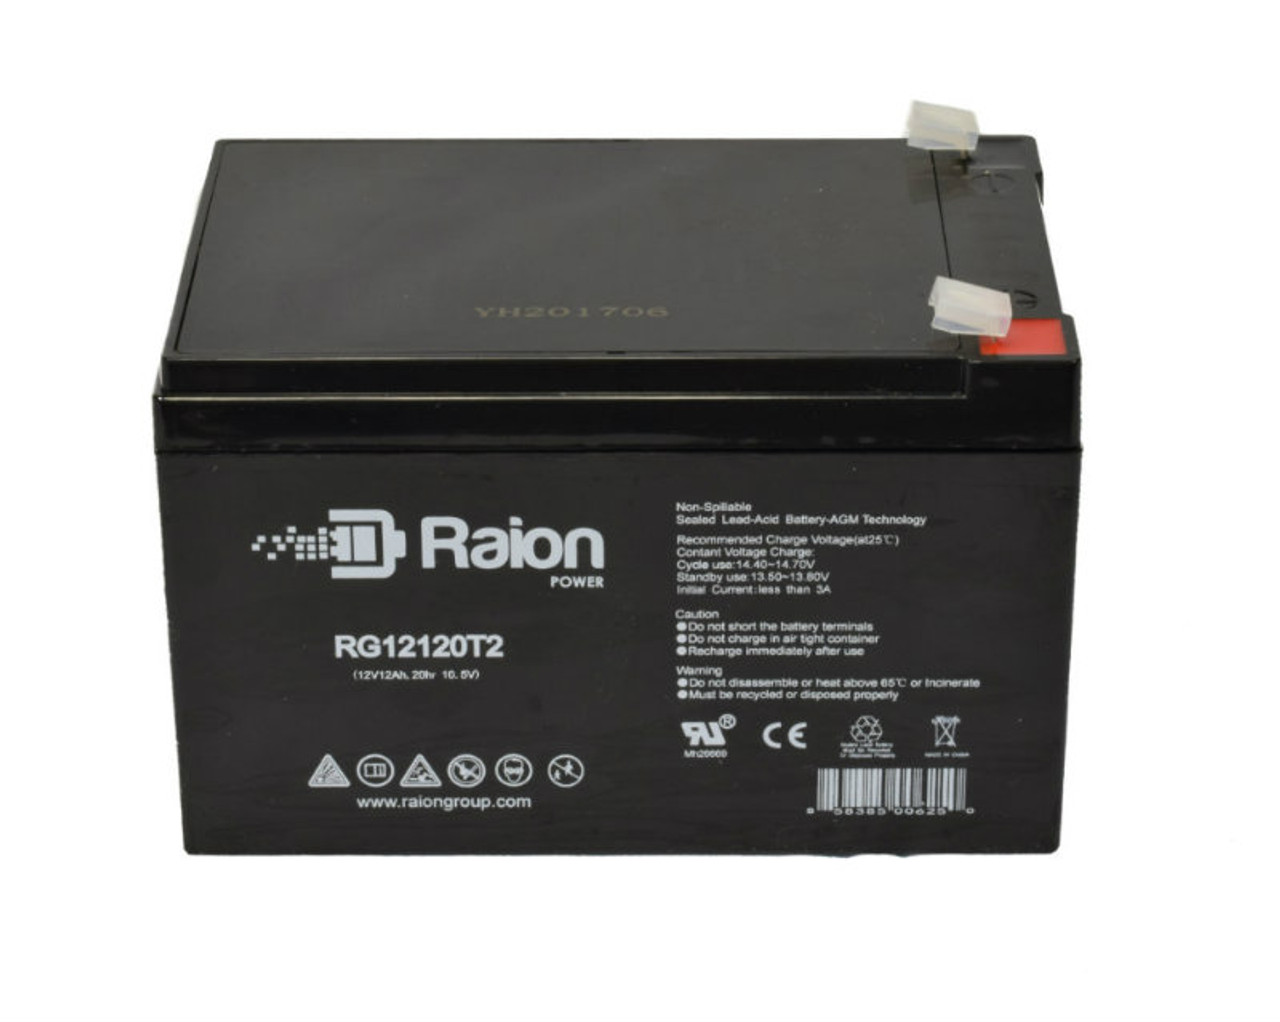 Raion Power RG12120T2 SLA Battery for Sonnenschein HEART LUNG